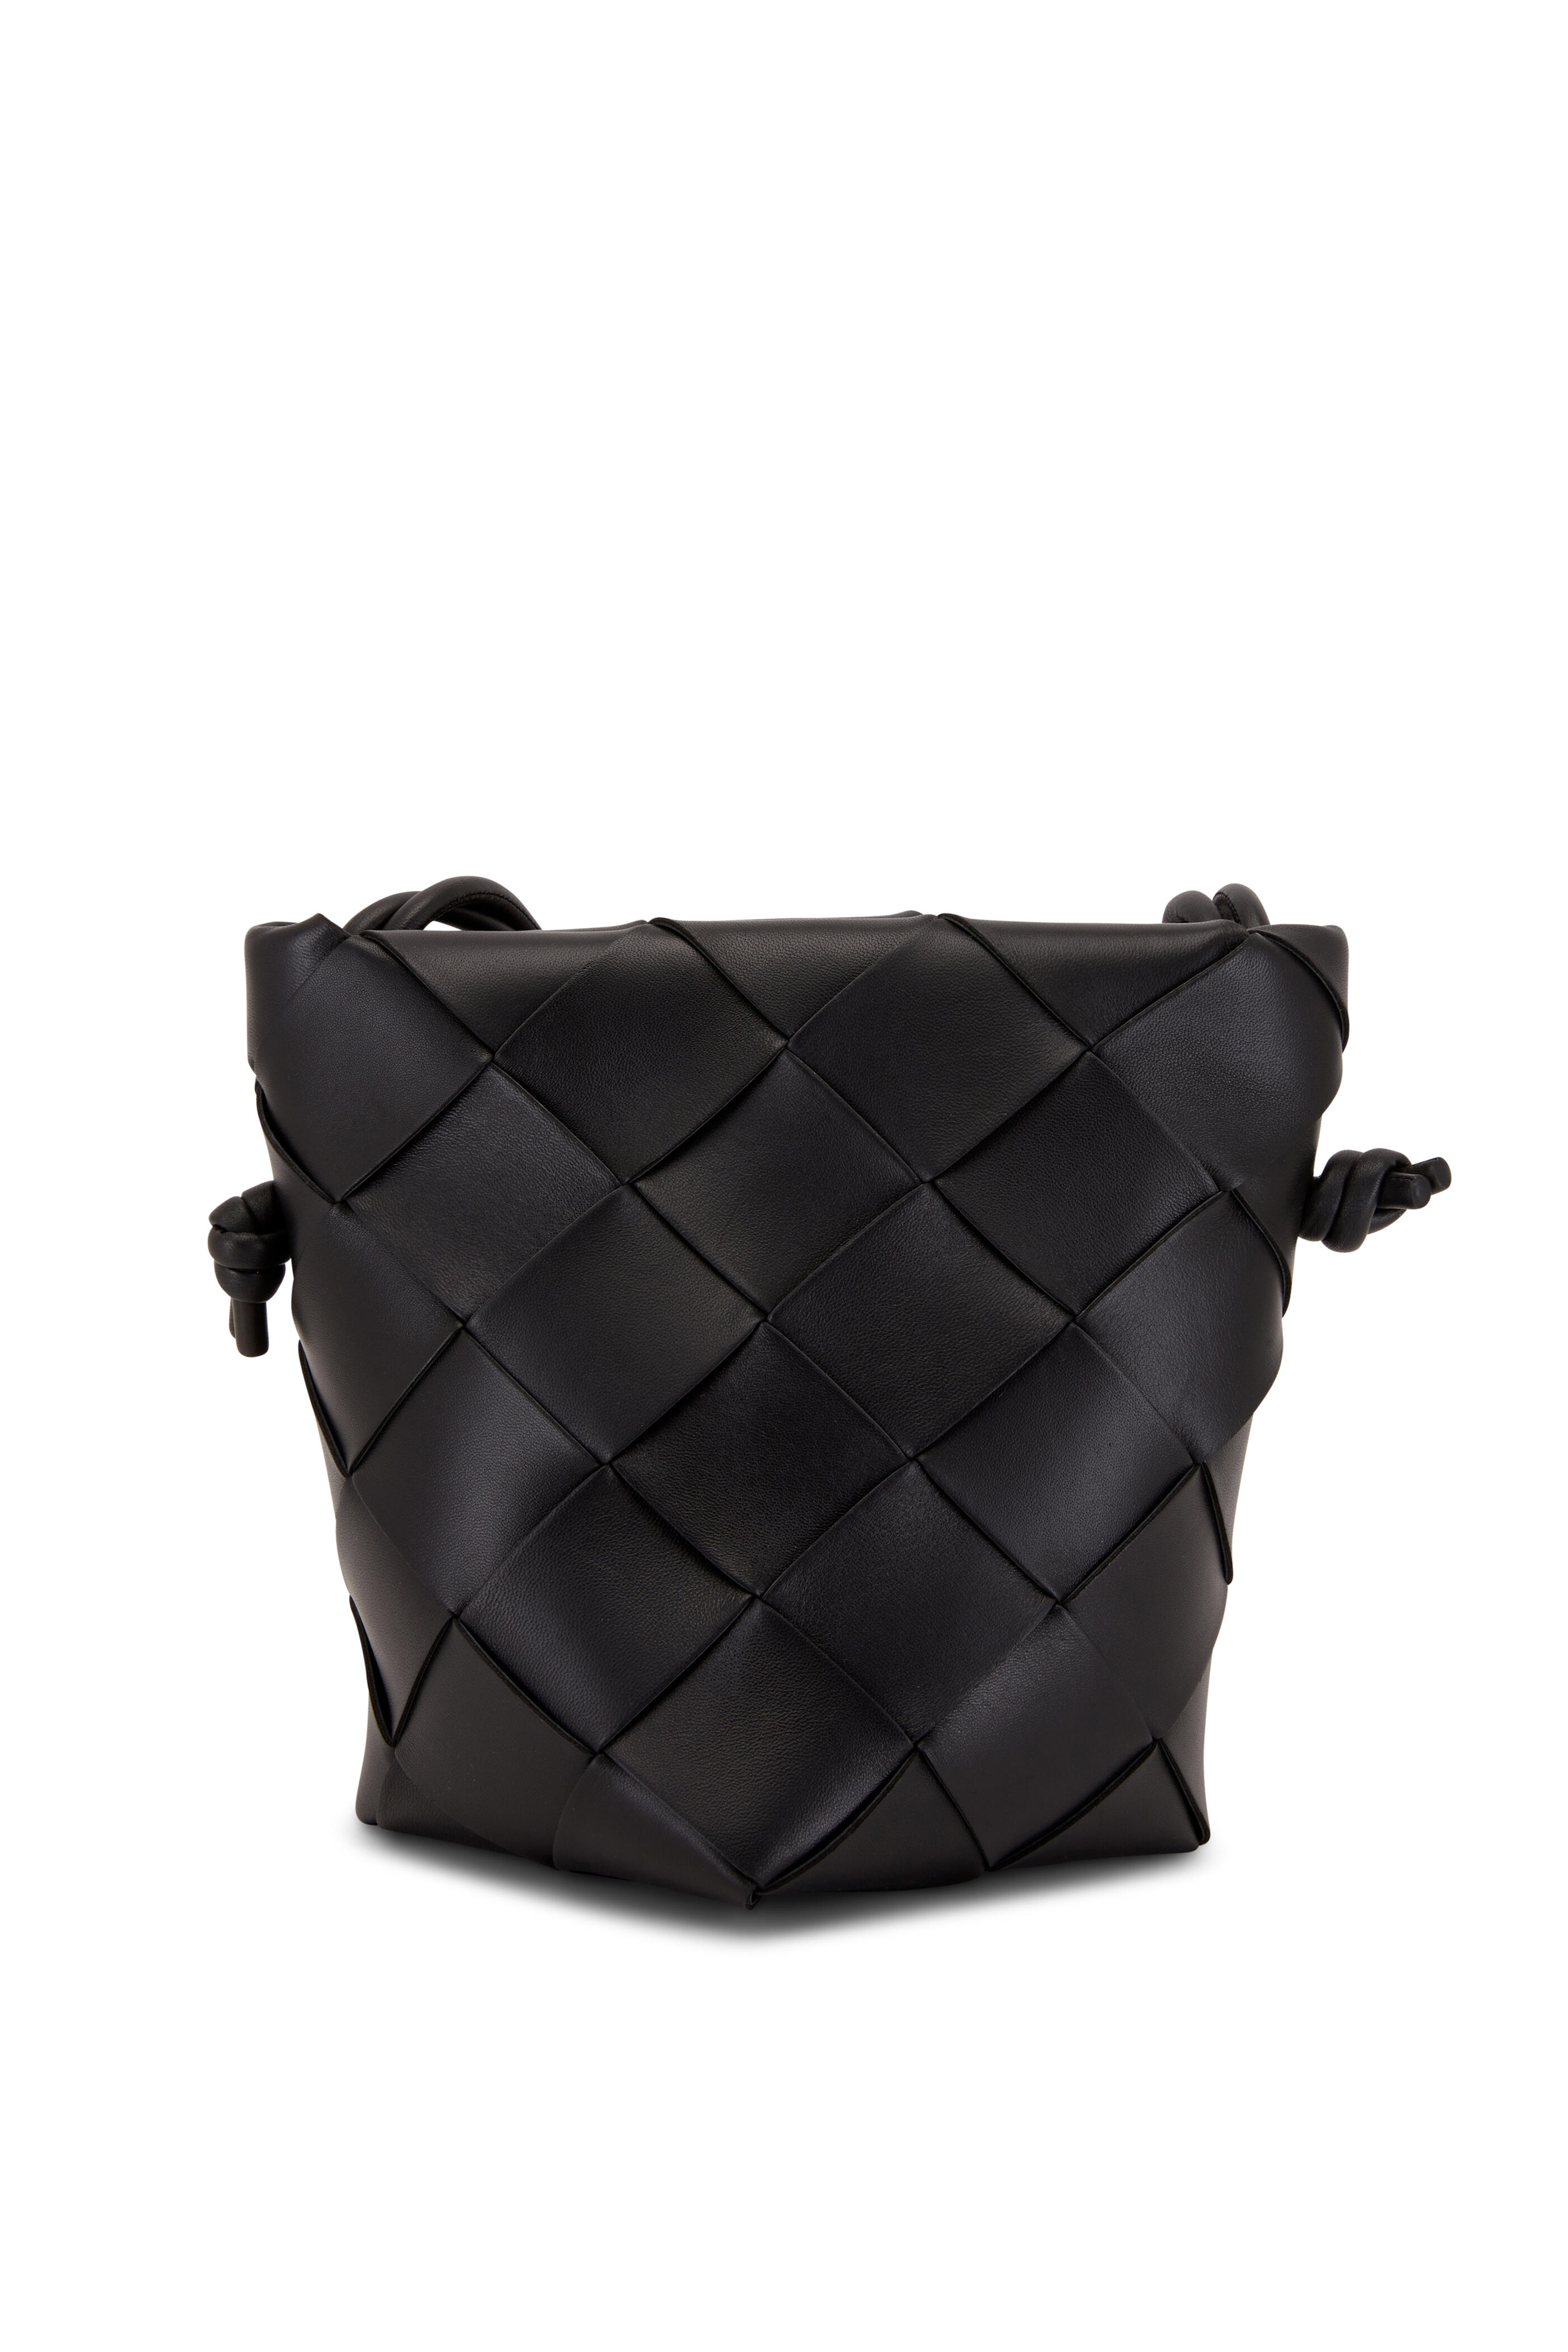 Bottega Veneta - Black Woven Leather Bucket Bag | Mitchell Stores